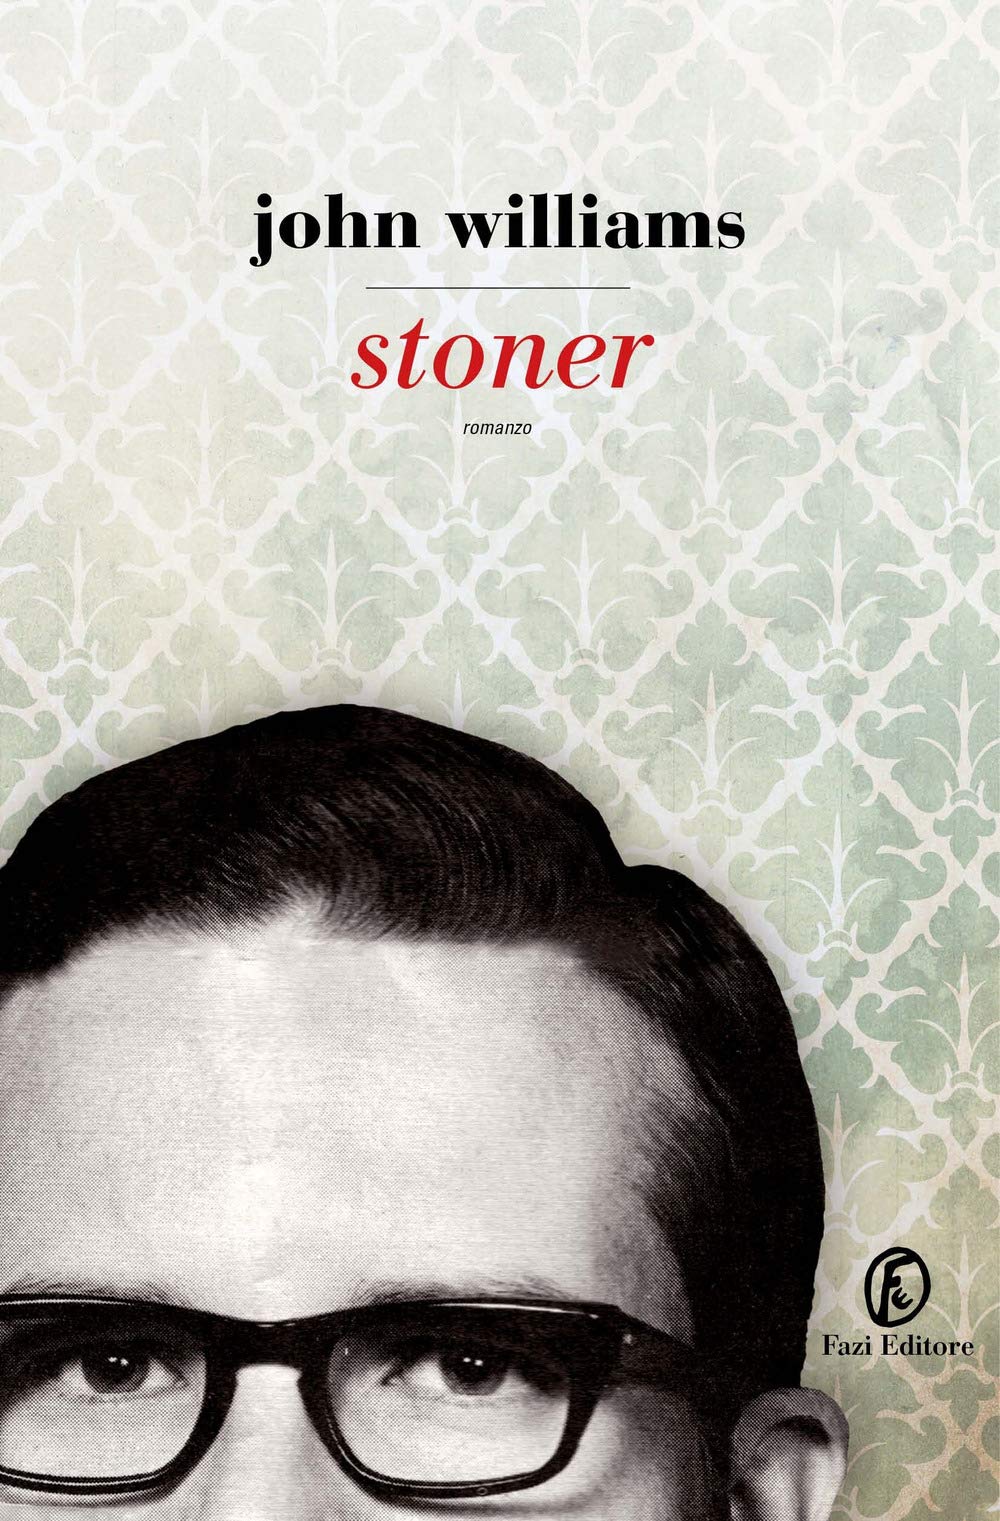 Book Club reads "Stoner"